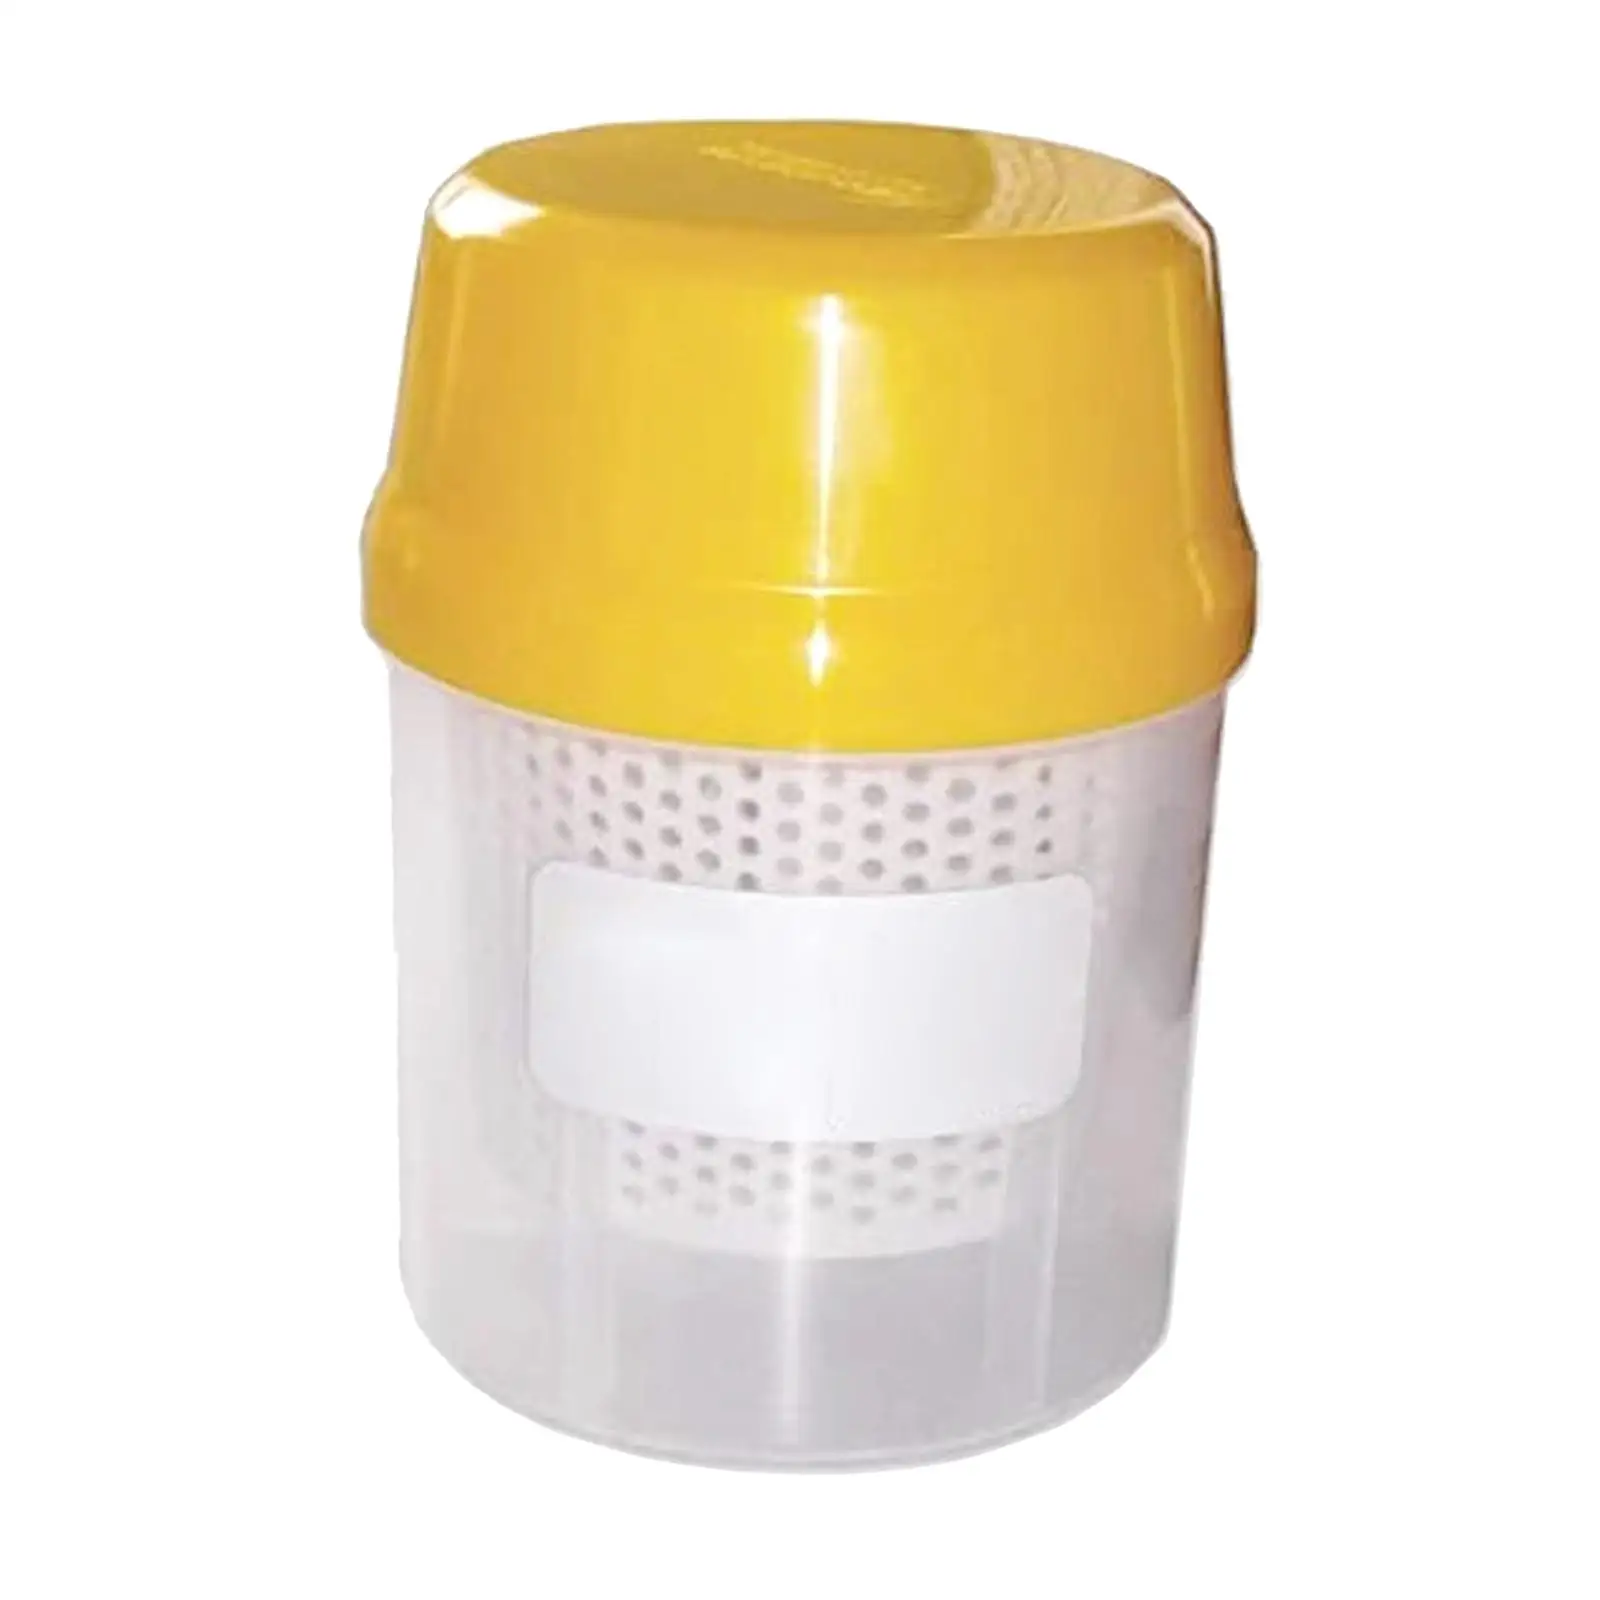 Plastic Varroa Shaker Monitoring   Beekeeping Equipment Tool